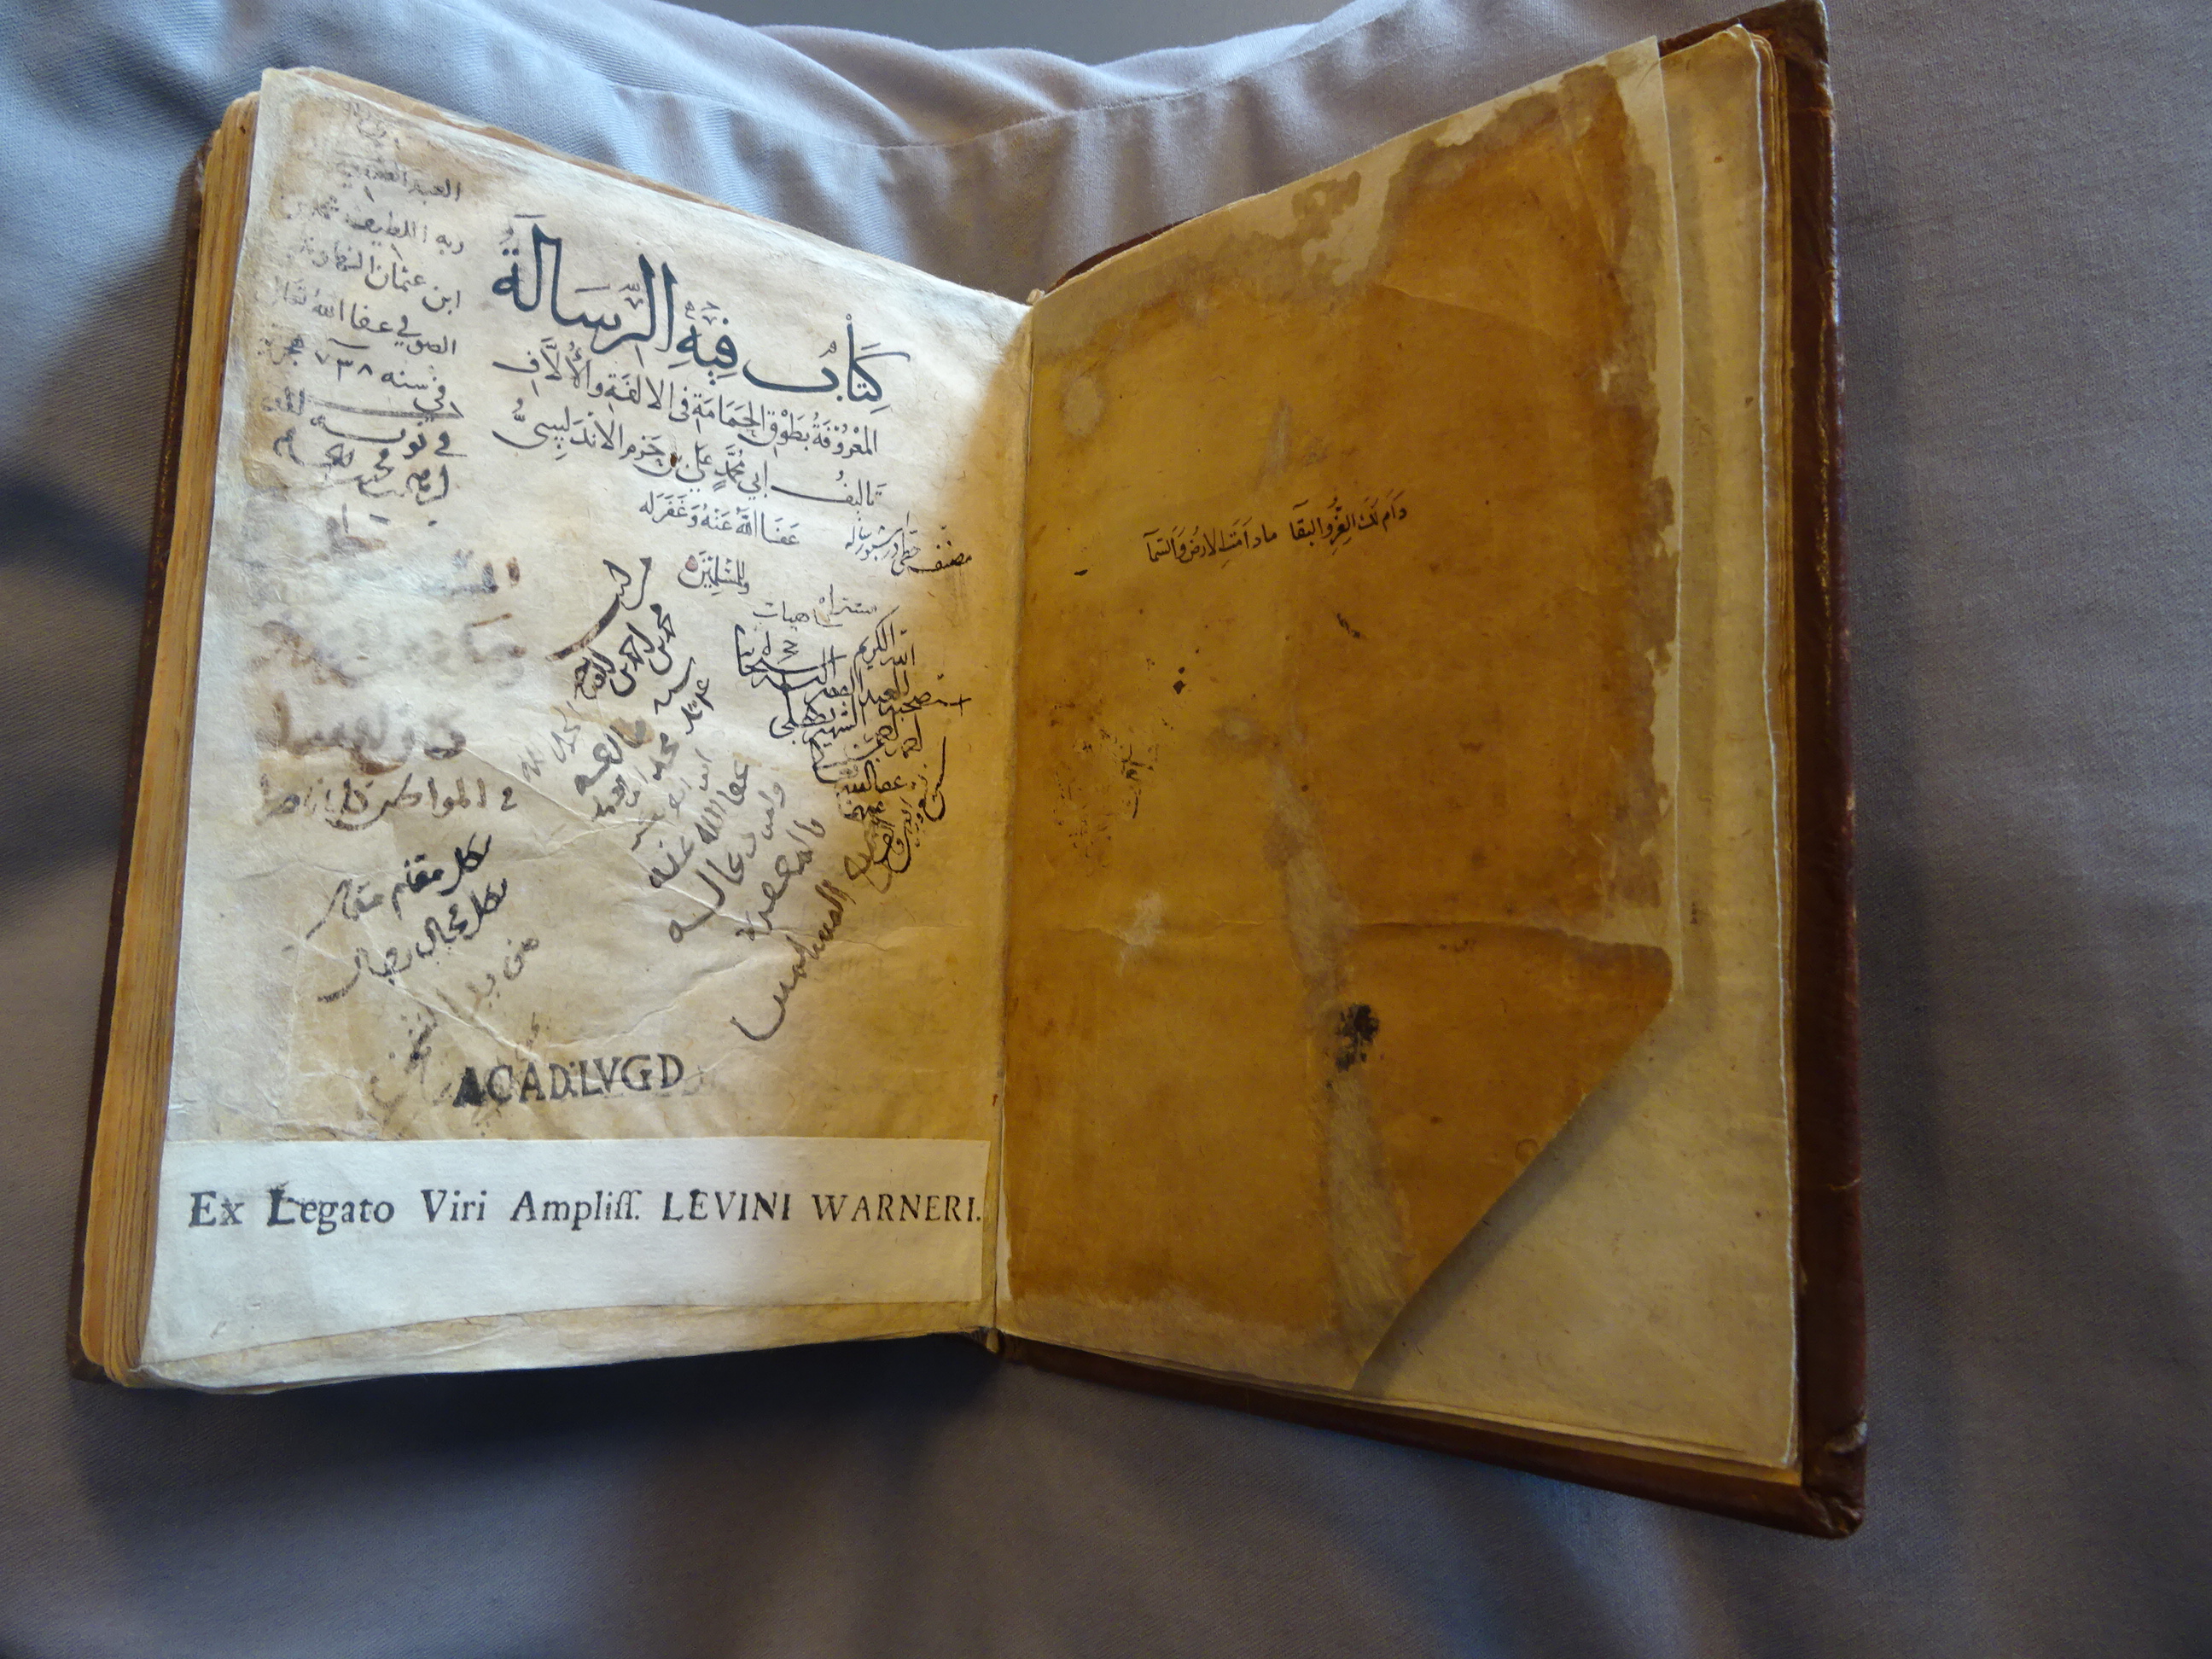 Le manuscrit du célèbre Tawk Al-Hamama, écrit par Ibn Hazm Al-Andalussi.